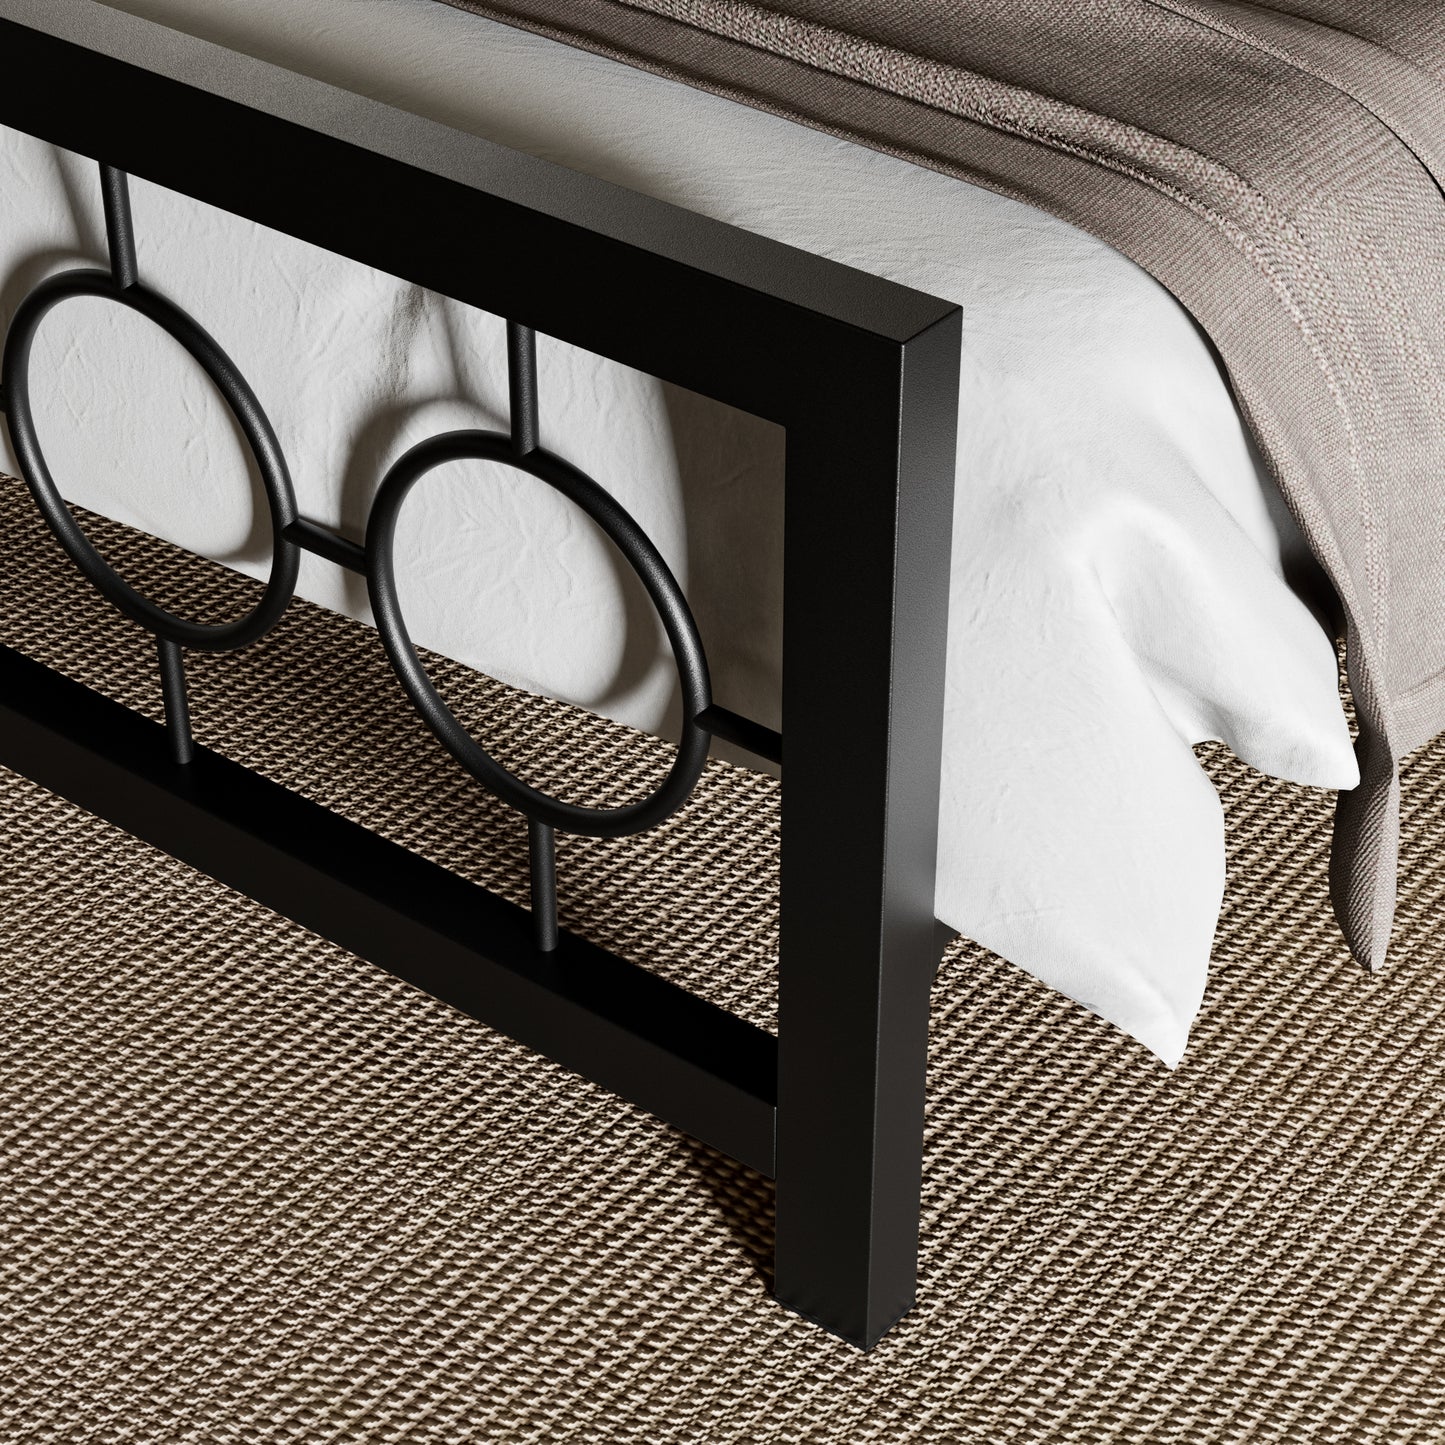 Allewie Metal Platform Bed Frame with Modern and Vintage Style Headboard